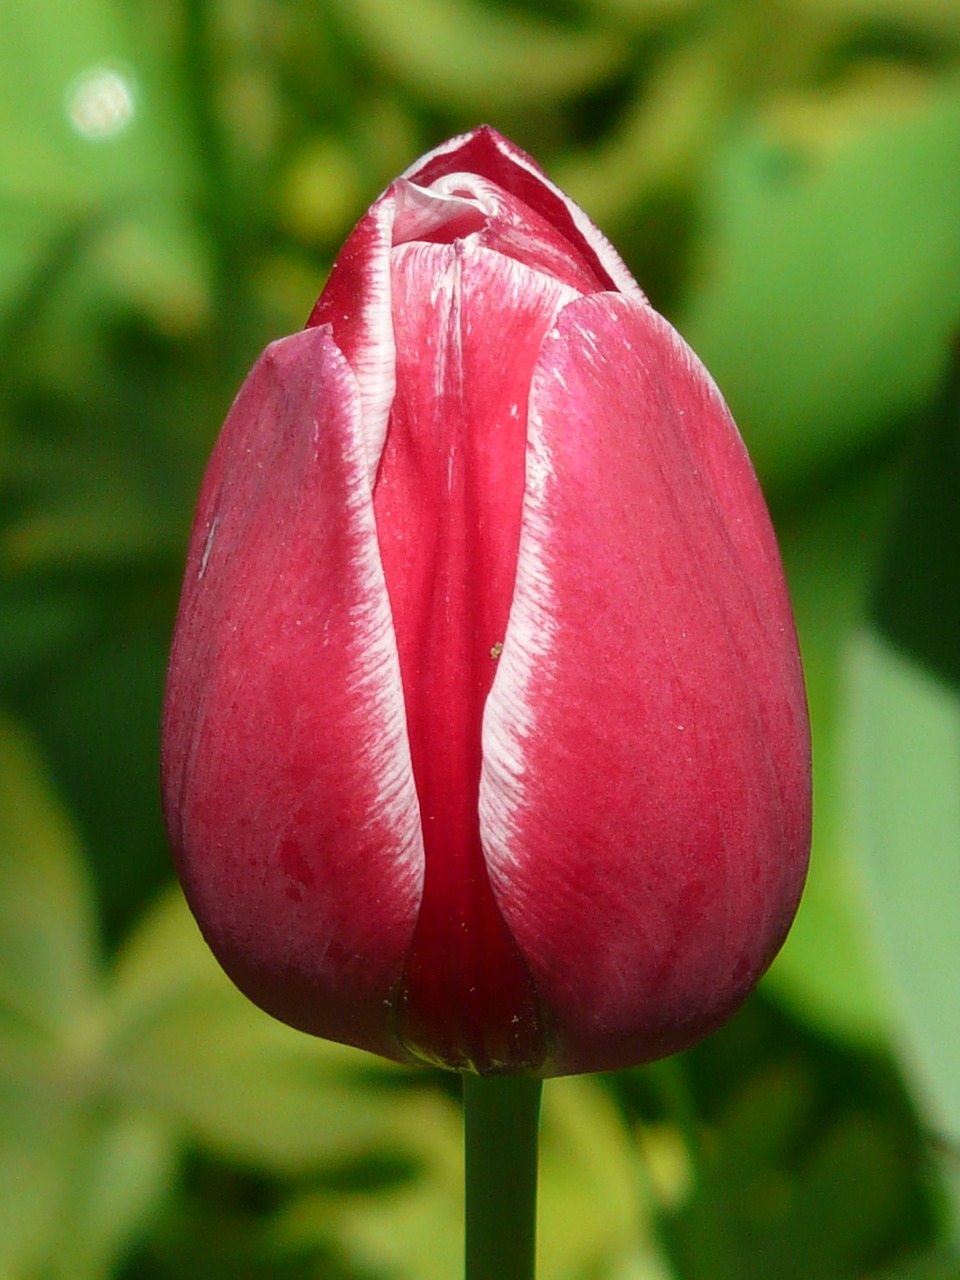 tulips red white free photo